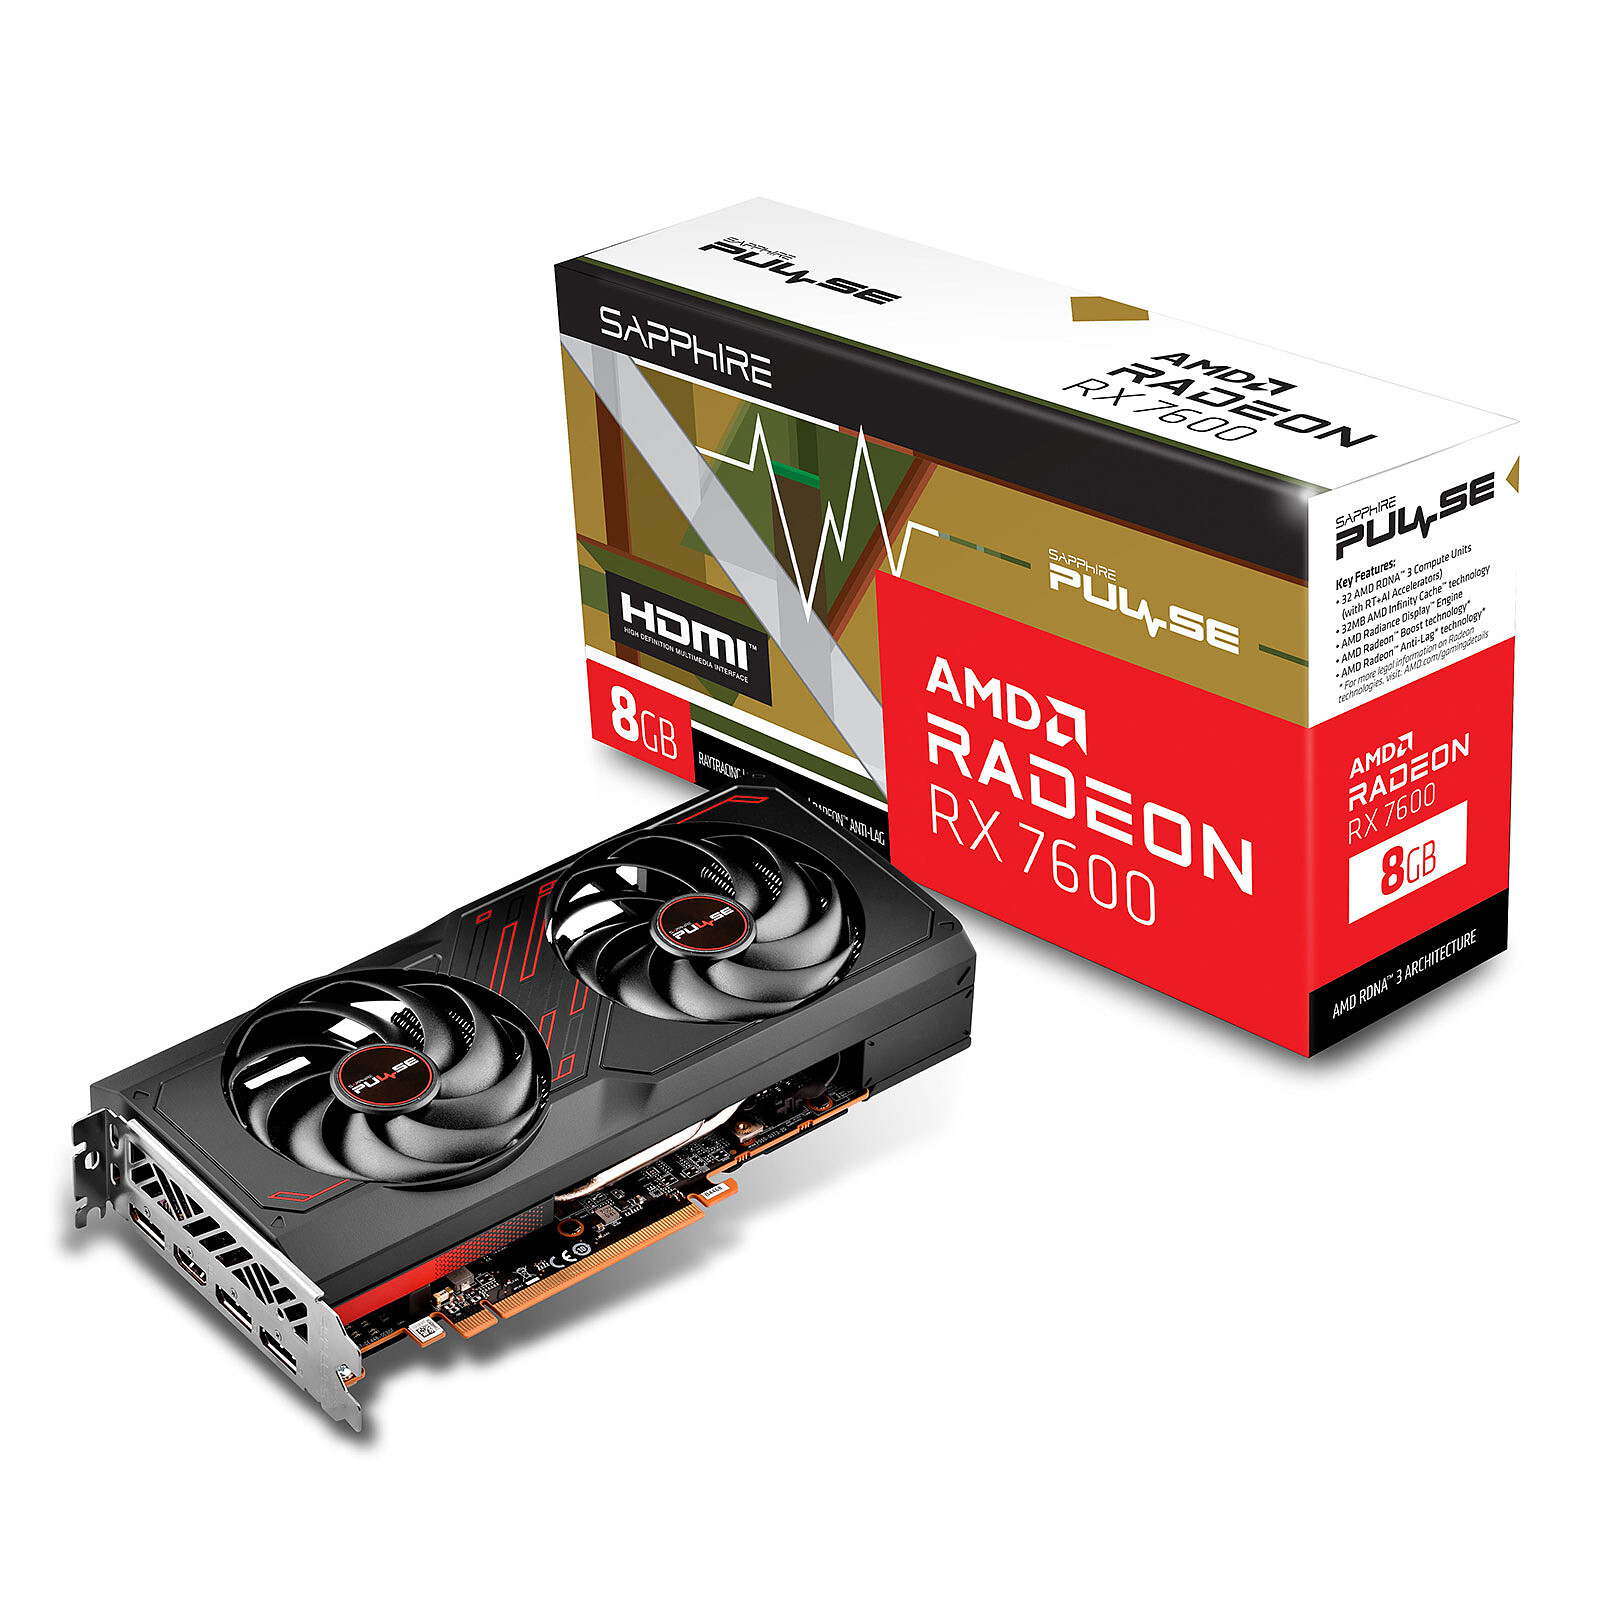 AMD's $269 Radeon RX 7600 GPU targets the 1080p 'sweet spot' - The